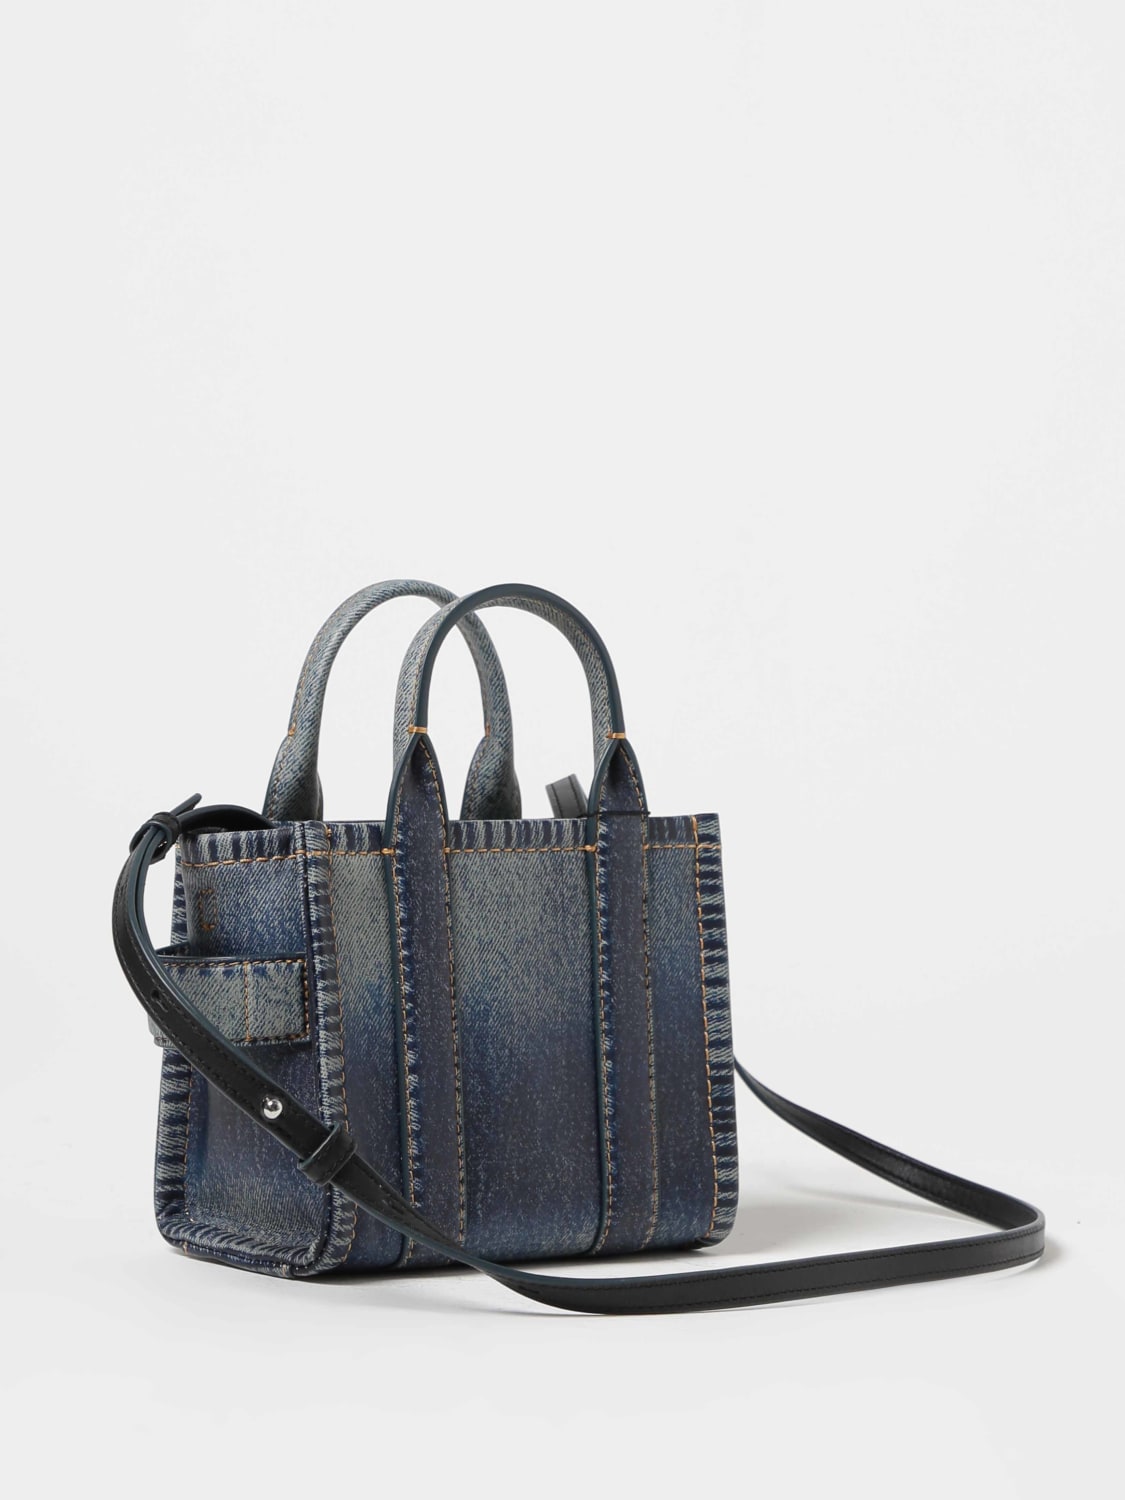 The Mini Tote Bag of Marc Jacobs - Khaki jean mini bag with shoulder strap  for women